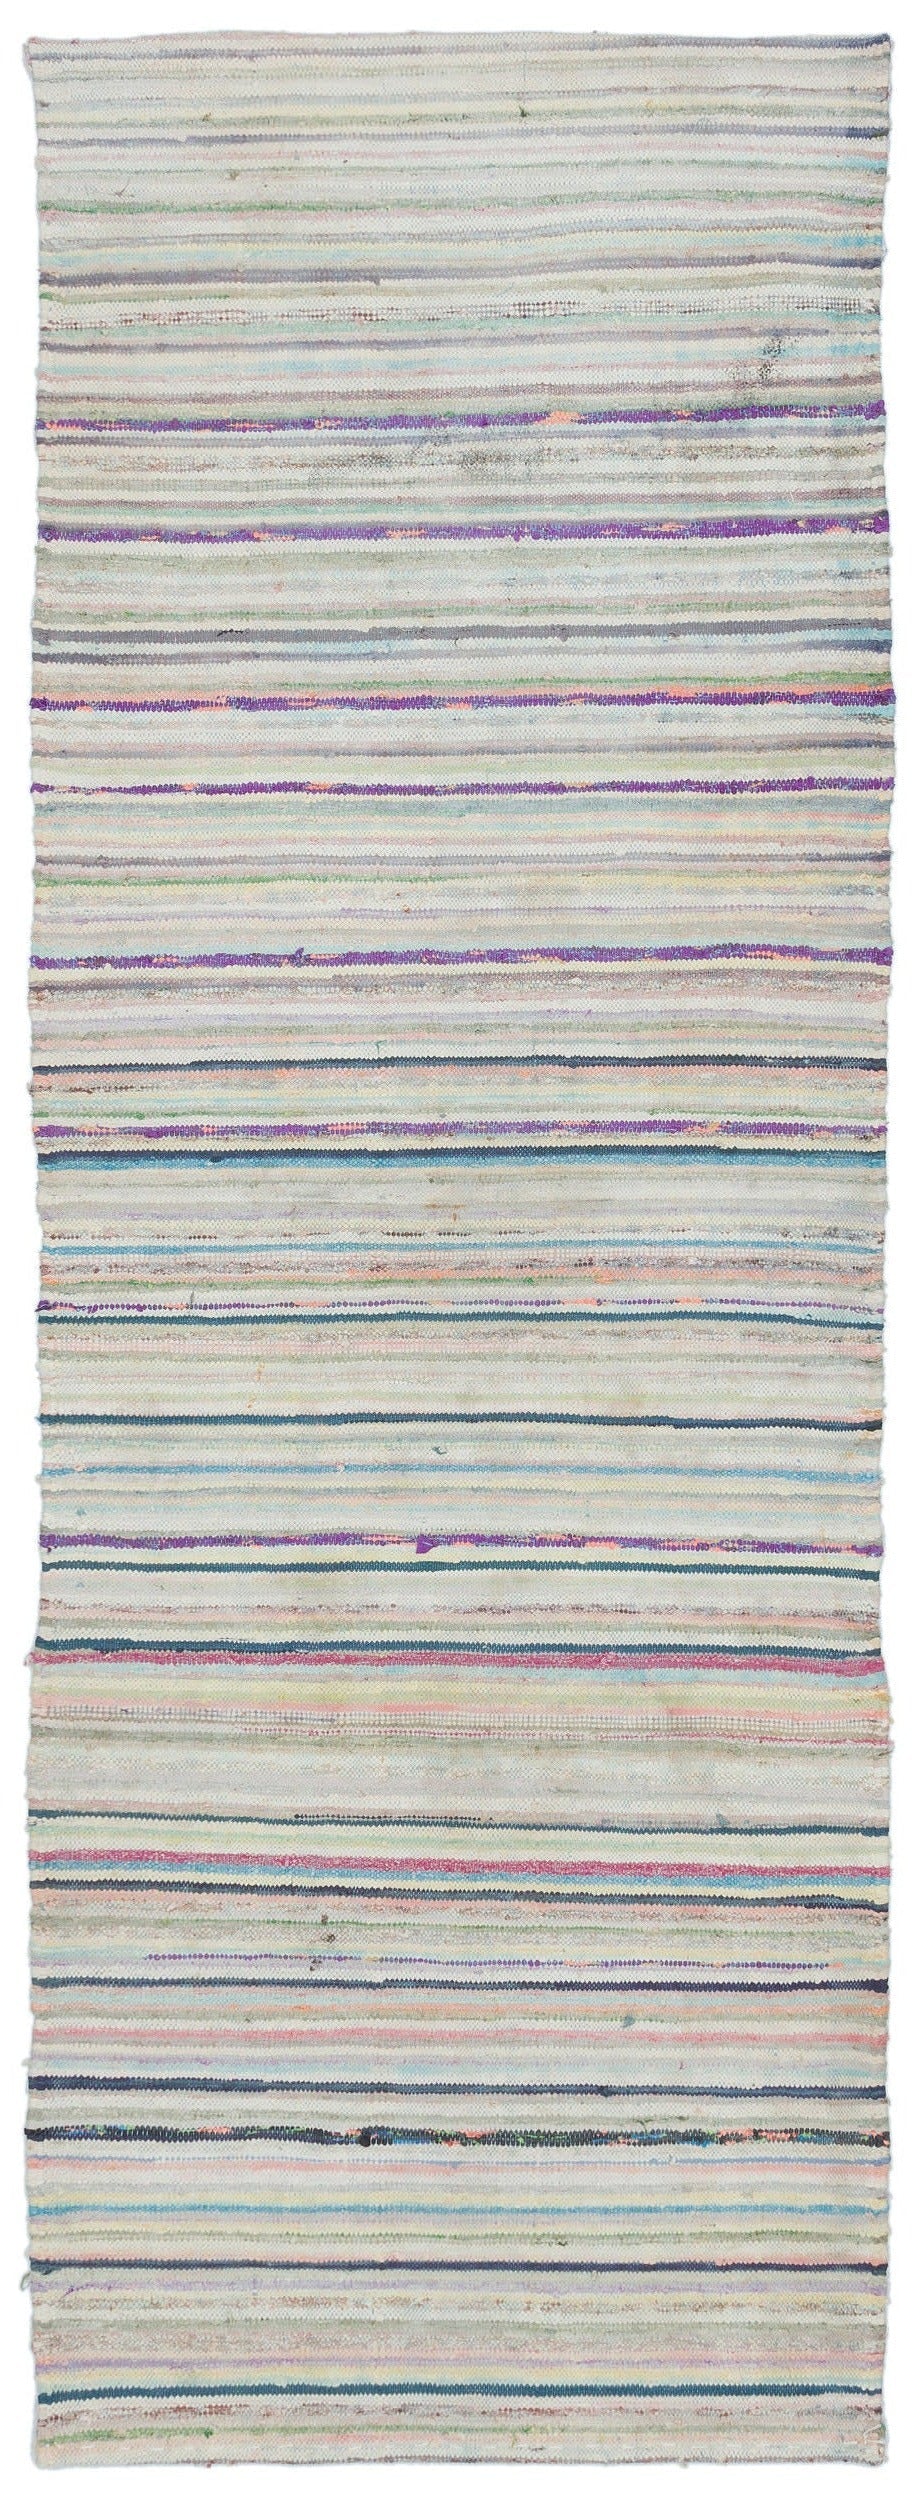 Cretan Beige Striped Wool Hand-Woven Carpet 083 x 238